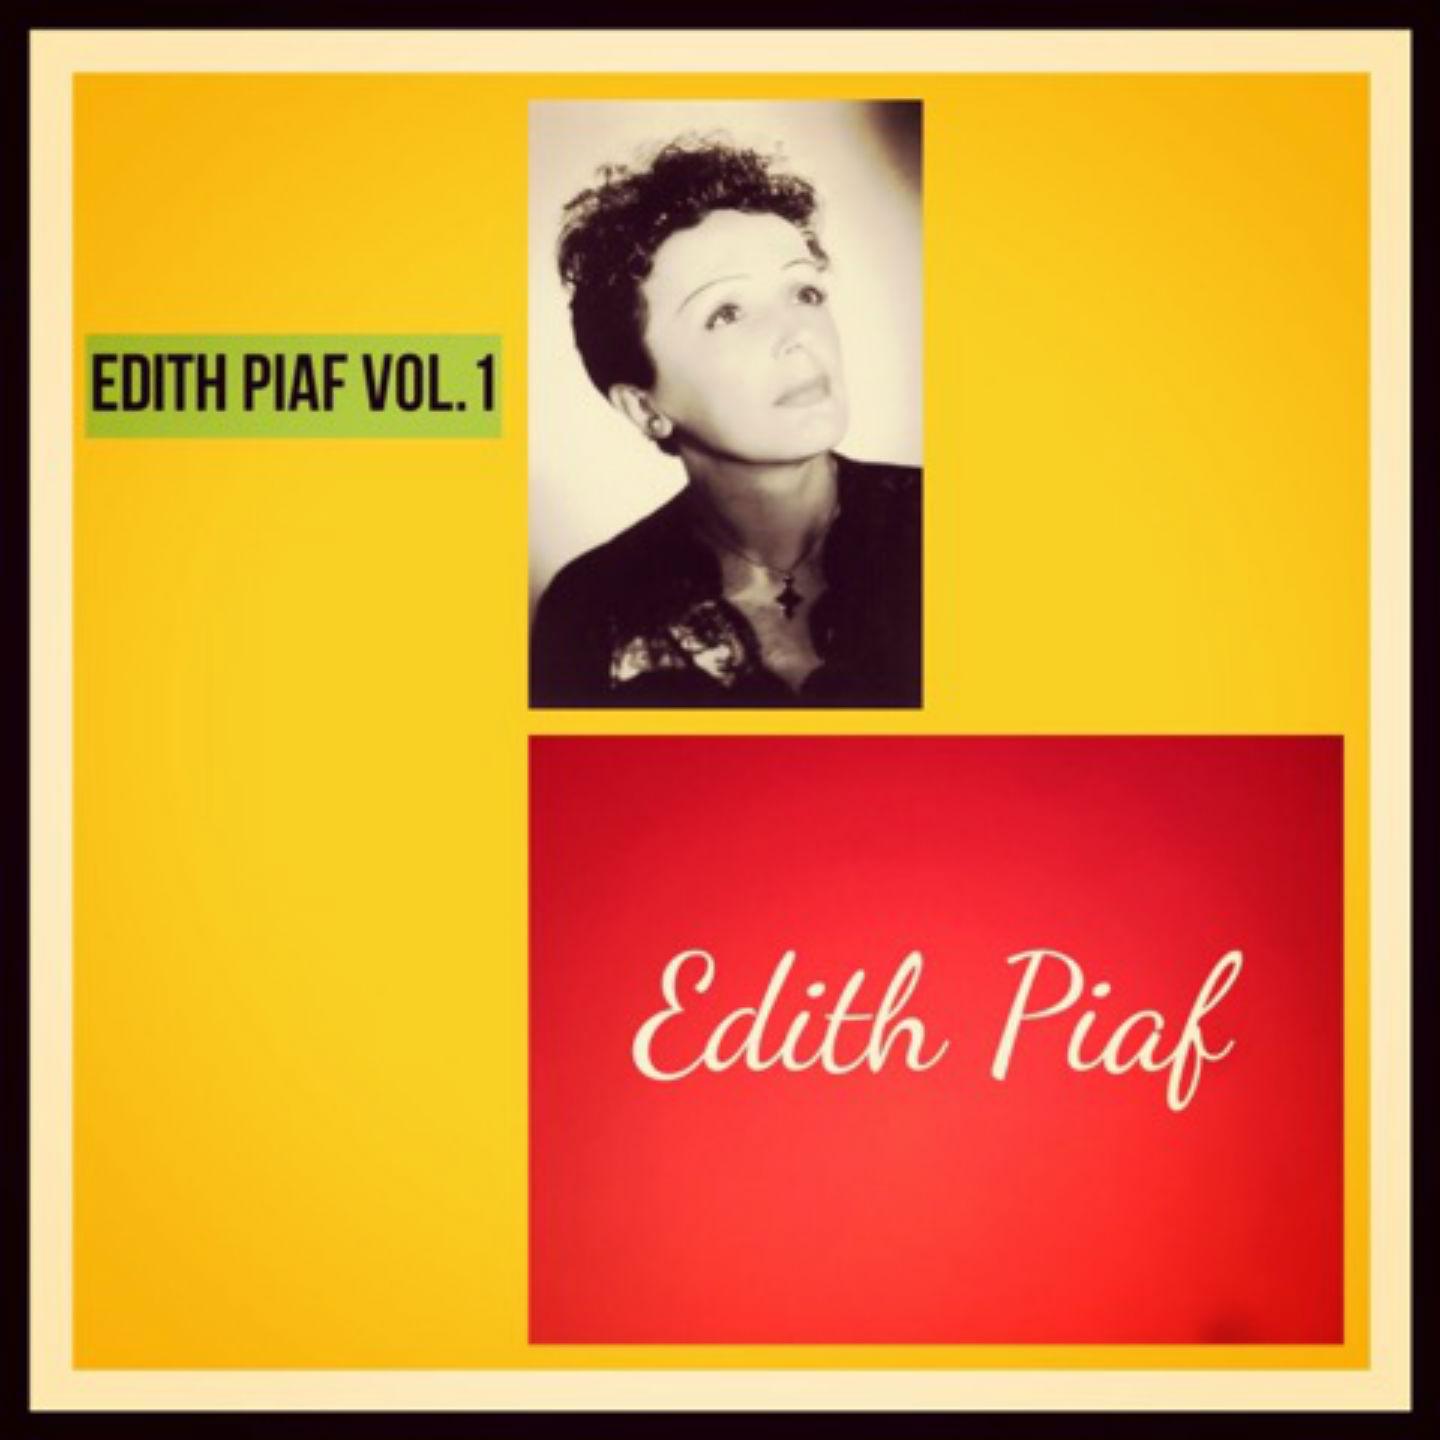 Edith Piaf Vol. 1